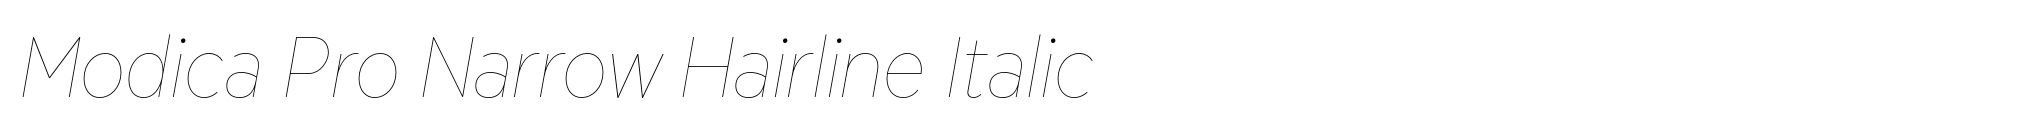 Modica Pro Narrow Hairline Italic image